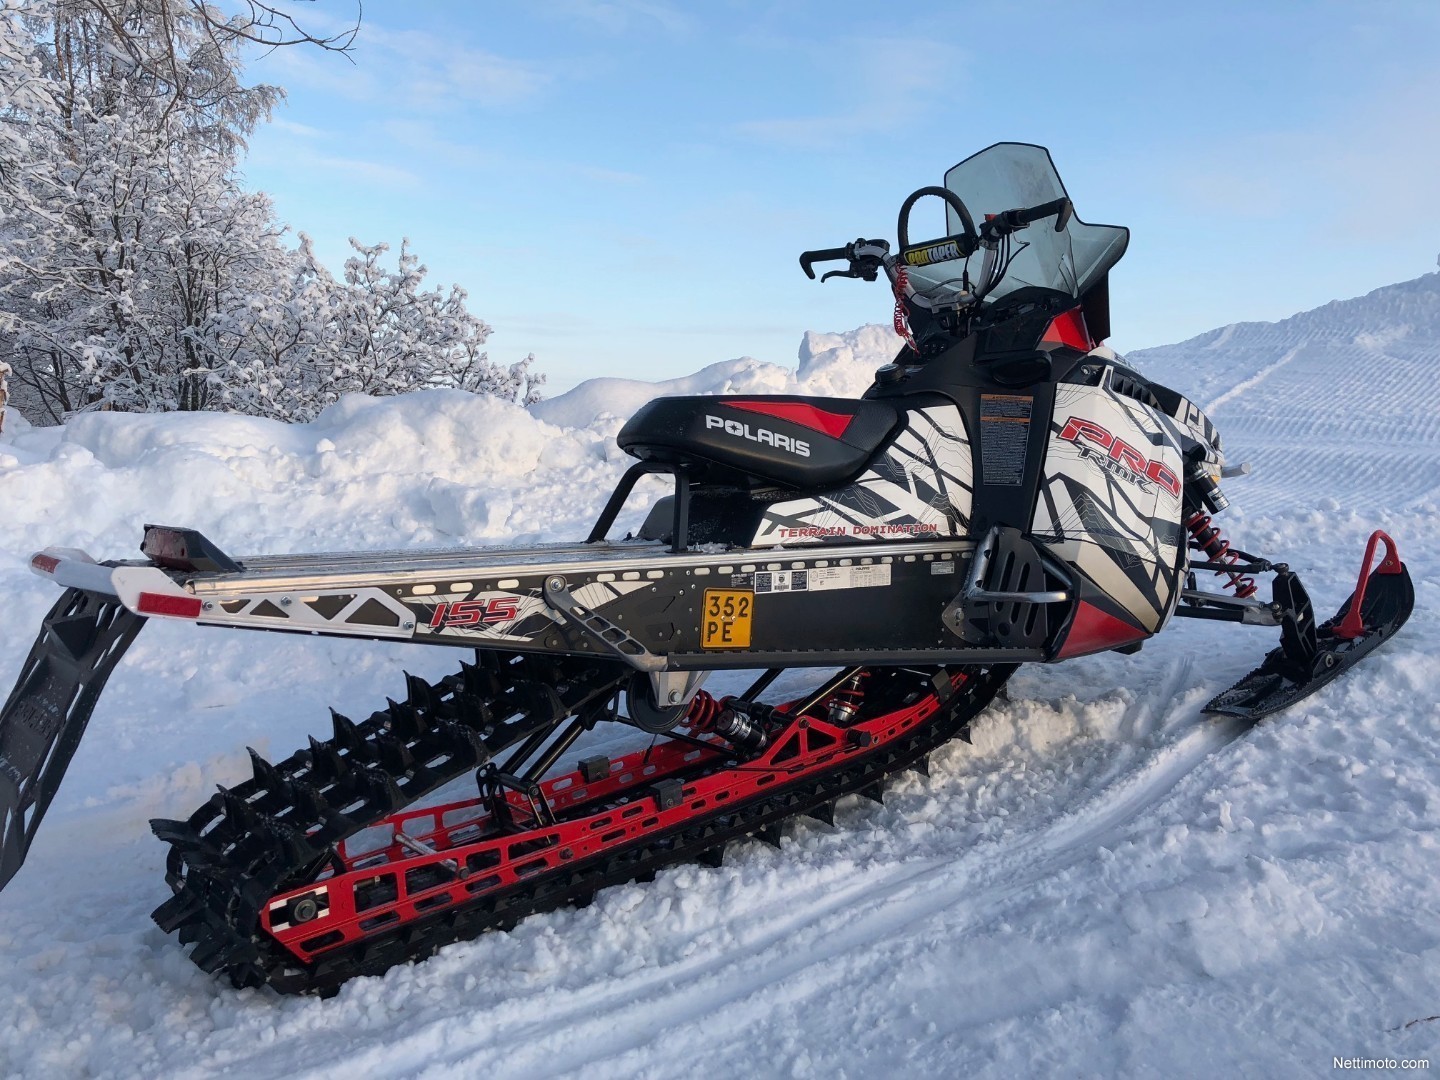 Polaris Pro Rmk 800 Tds Le 155 800 Cm³ 2015 Kemijärvi Snow Mobile Nettimoto